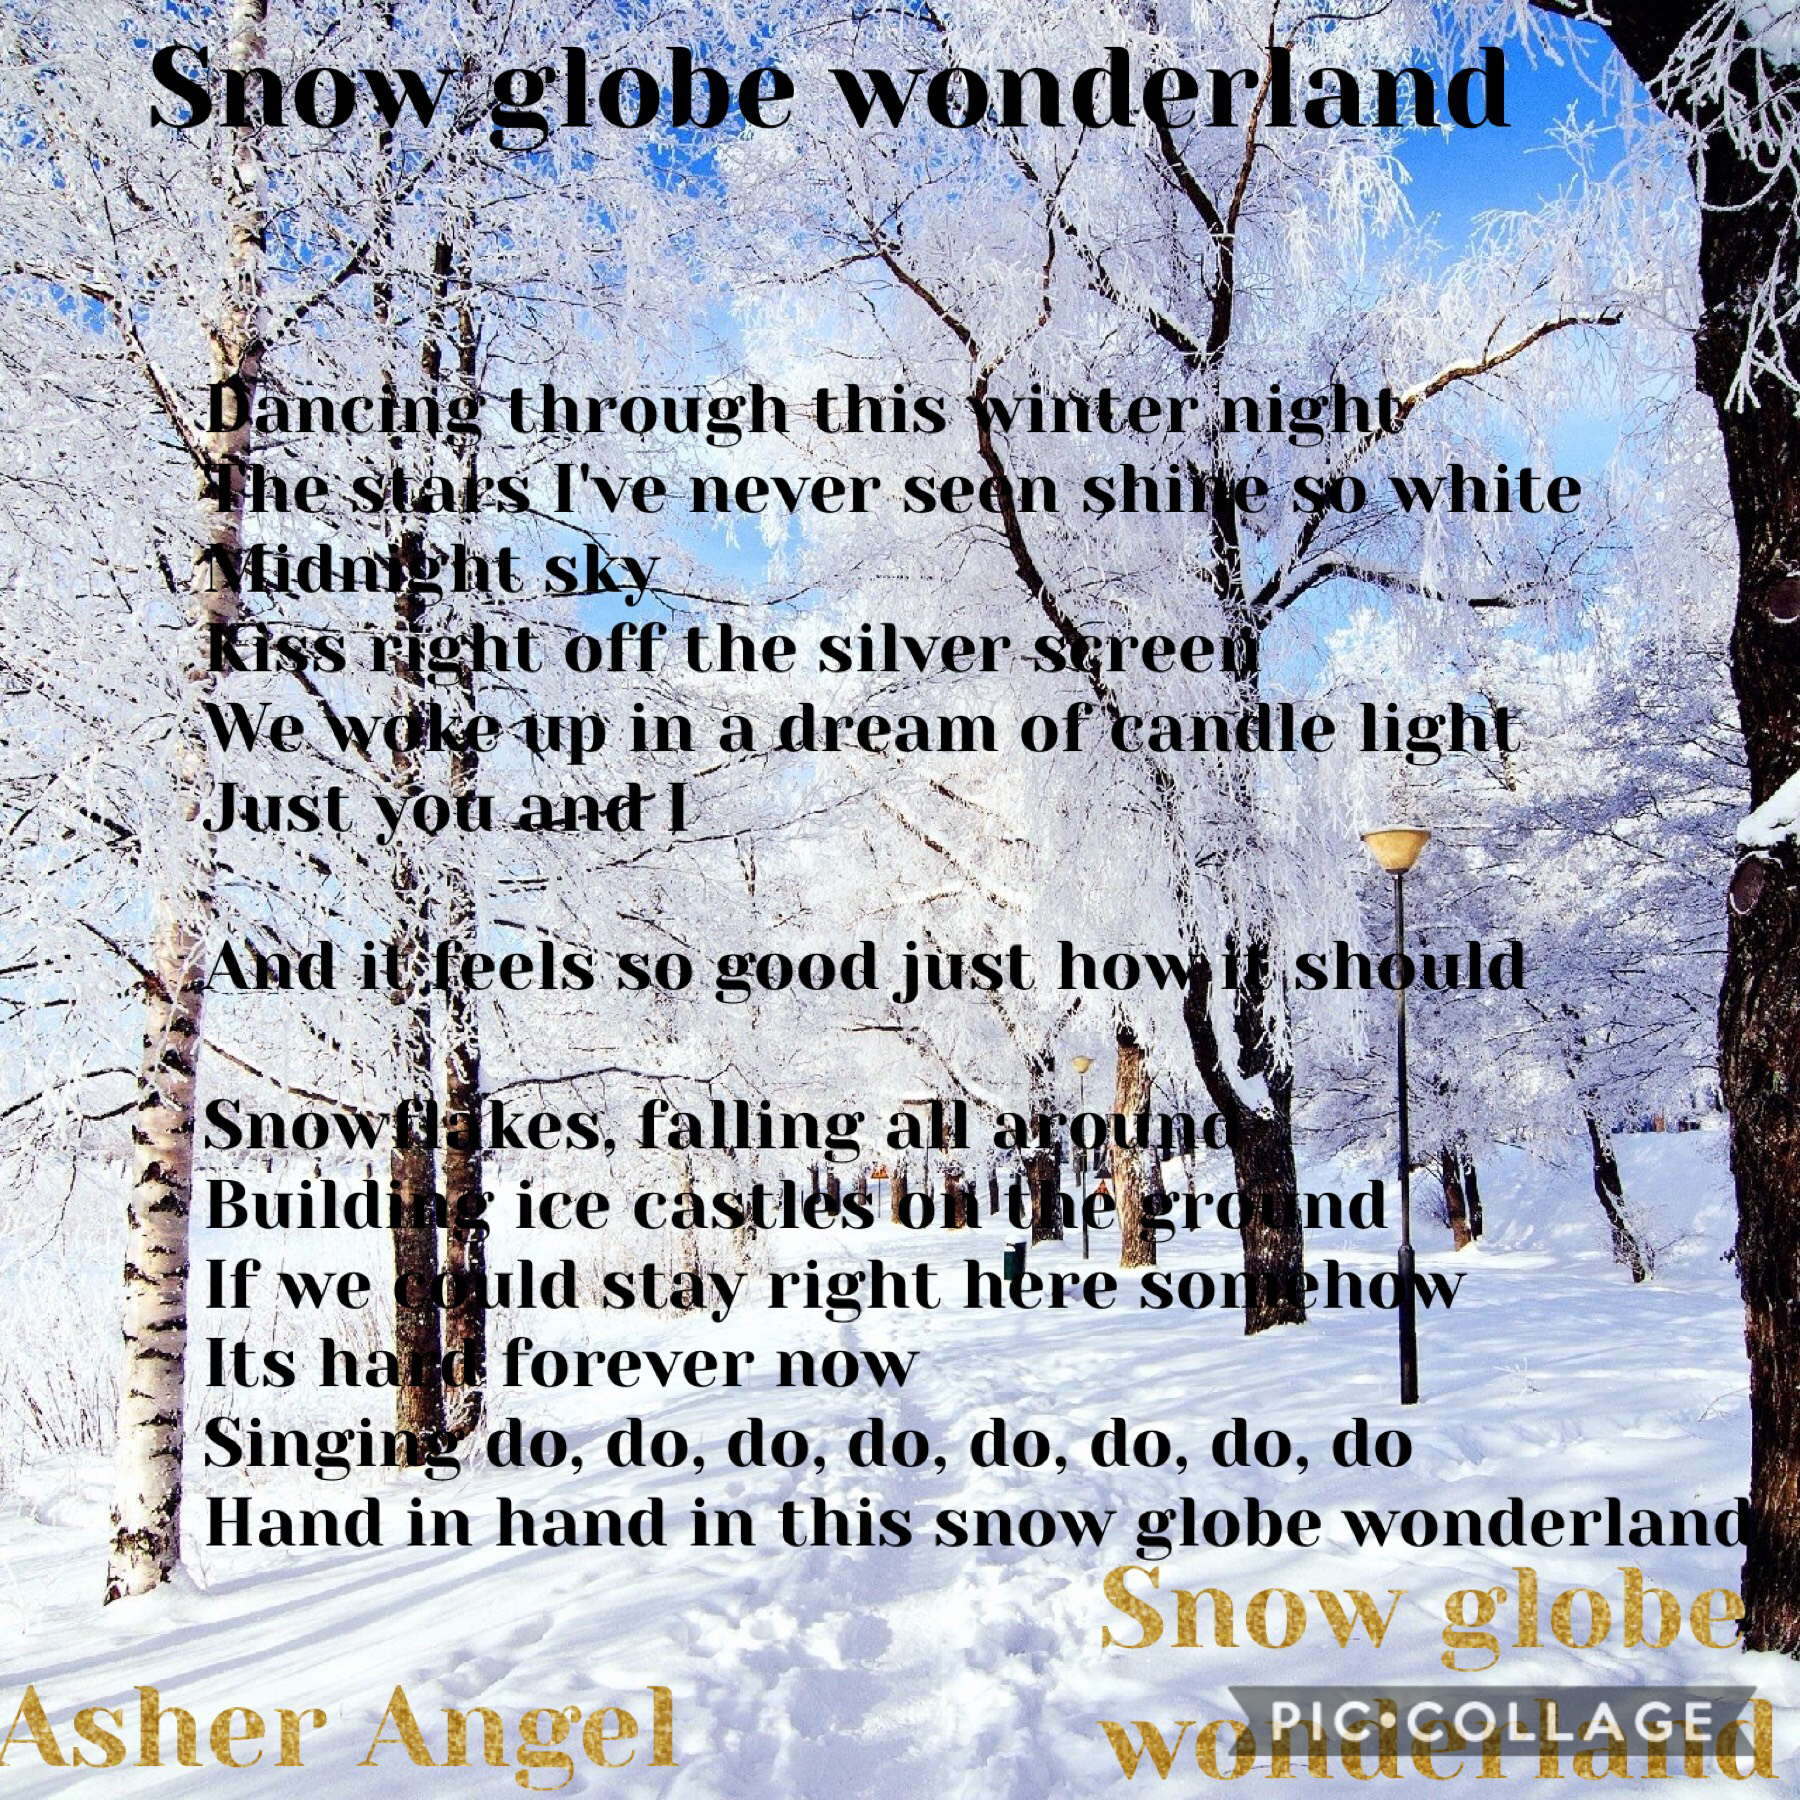 Snow globe wonderland Asher angel